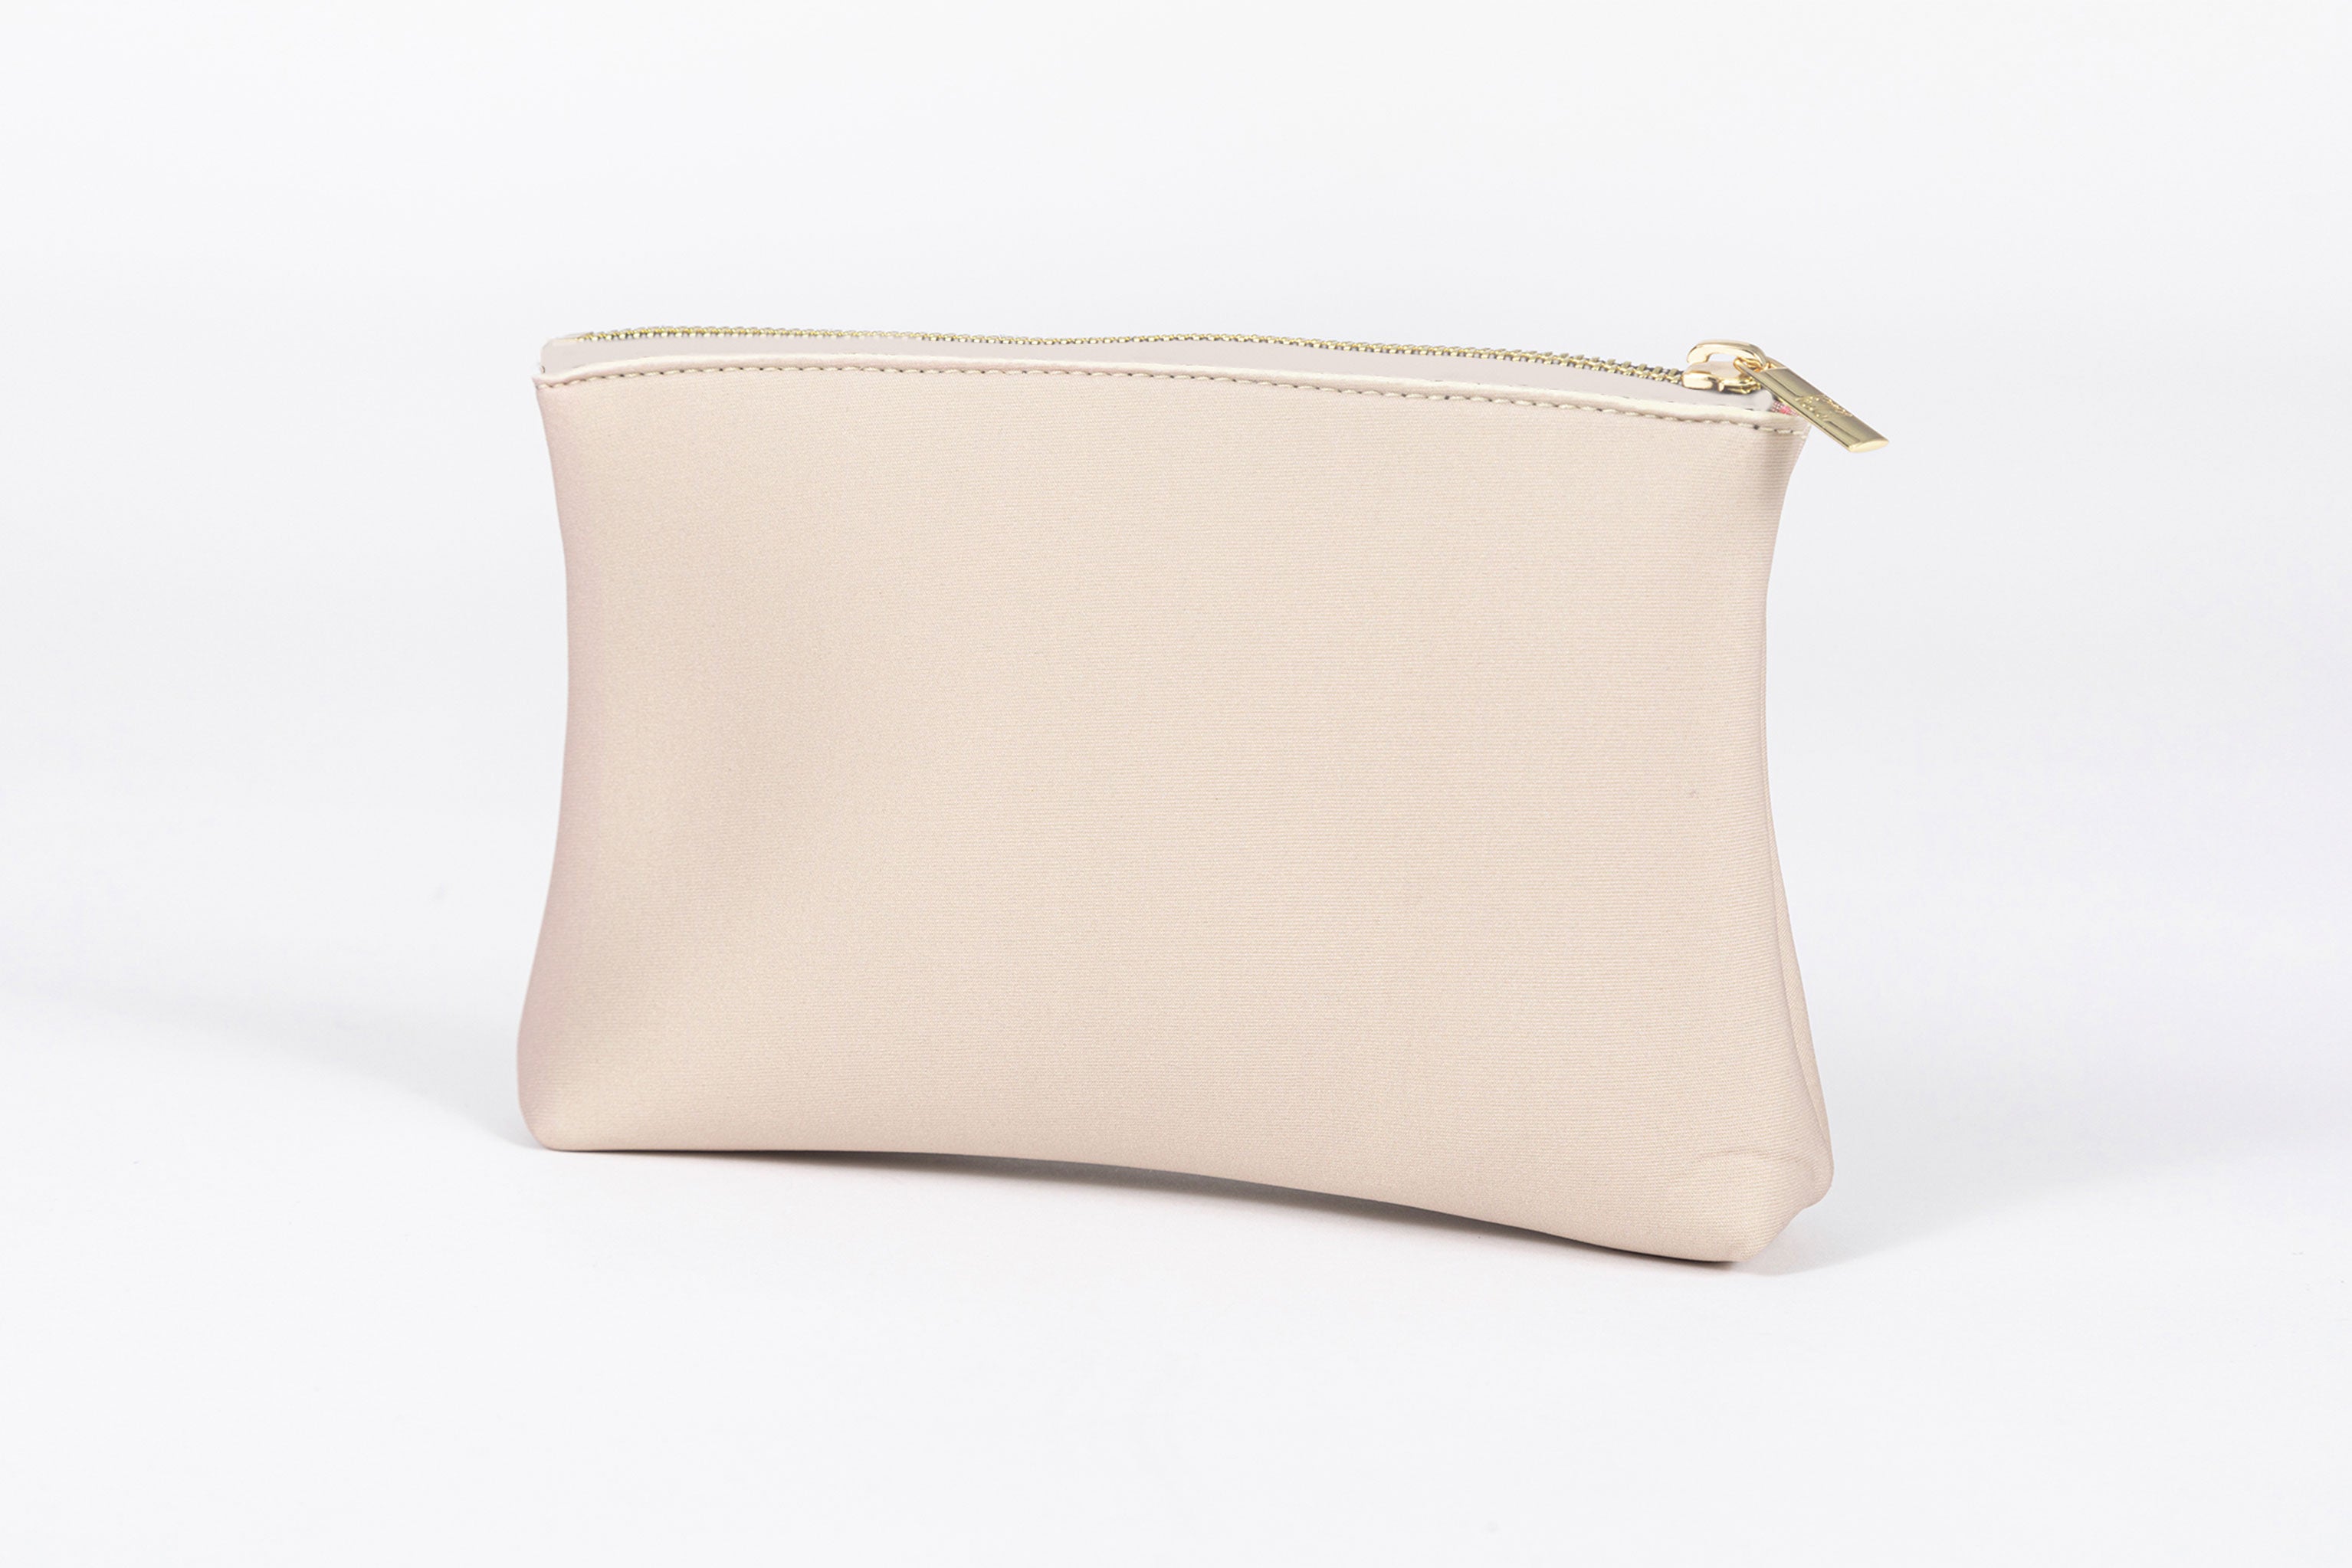 Pearl Decor Box Bag | Clear Bag Pearls | Clear Clutch Bag | Evening Handbags  - Box Bag - Aliexpress